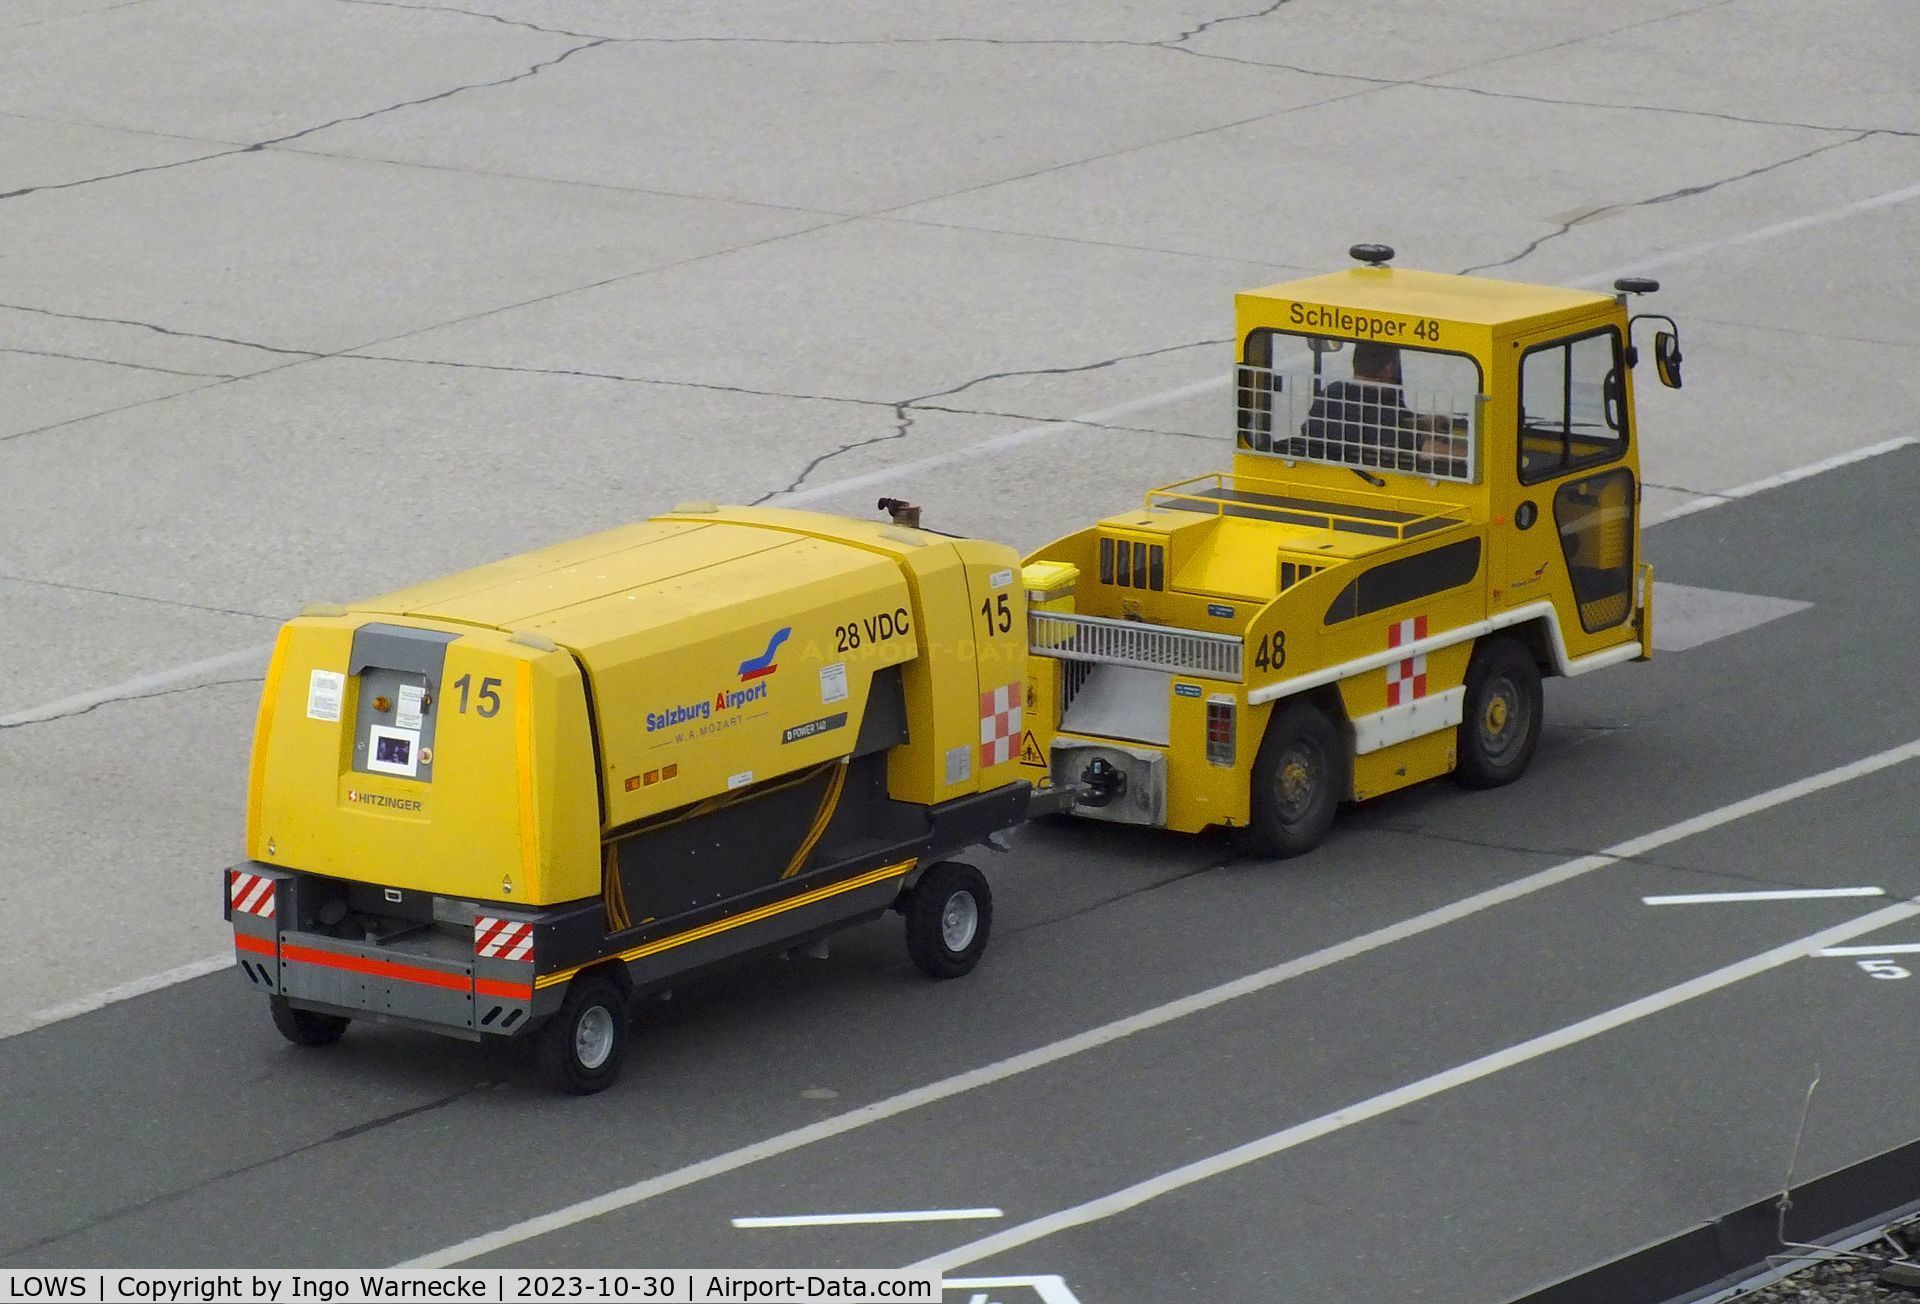 Salzburg Airport, Salzburg Austria (LOWS) - light tow vehicle and generator trailer at Salzburg airport